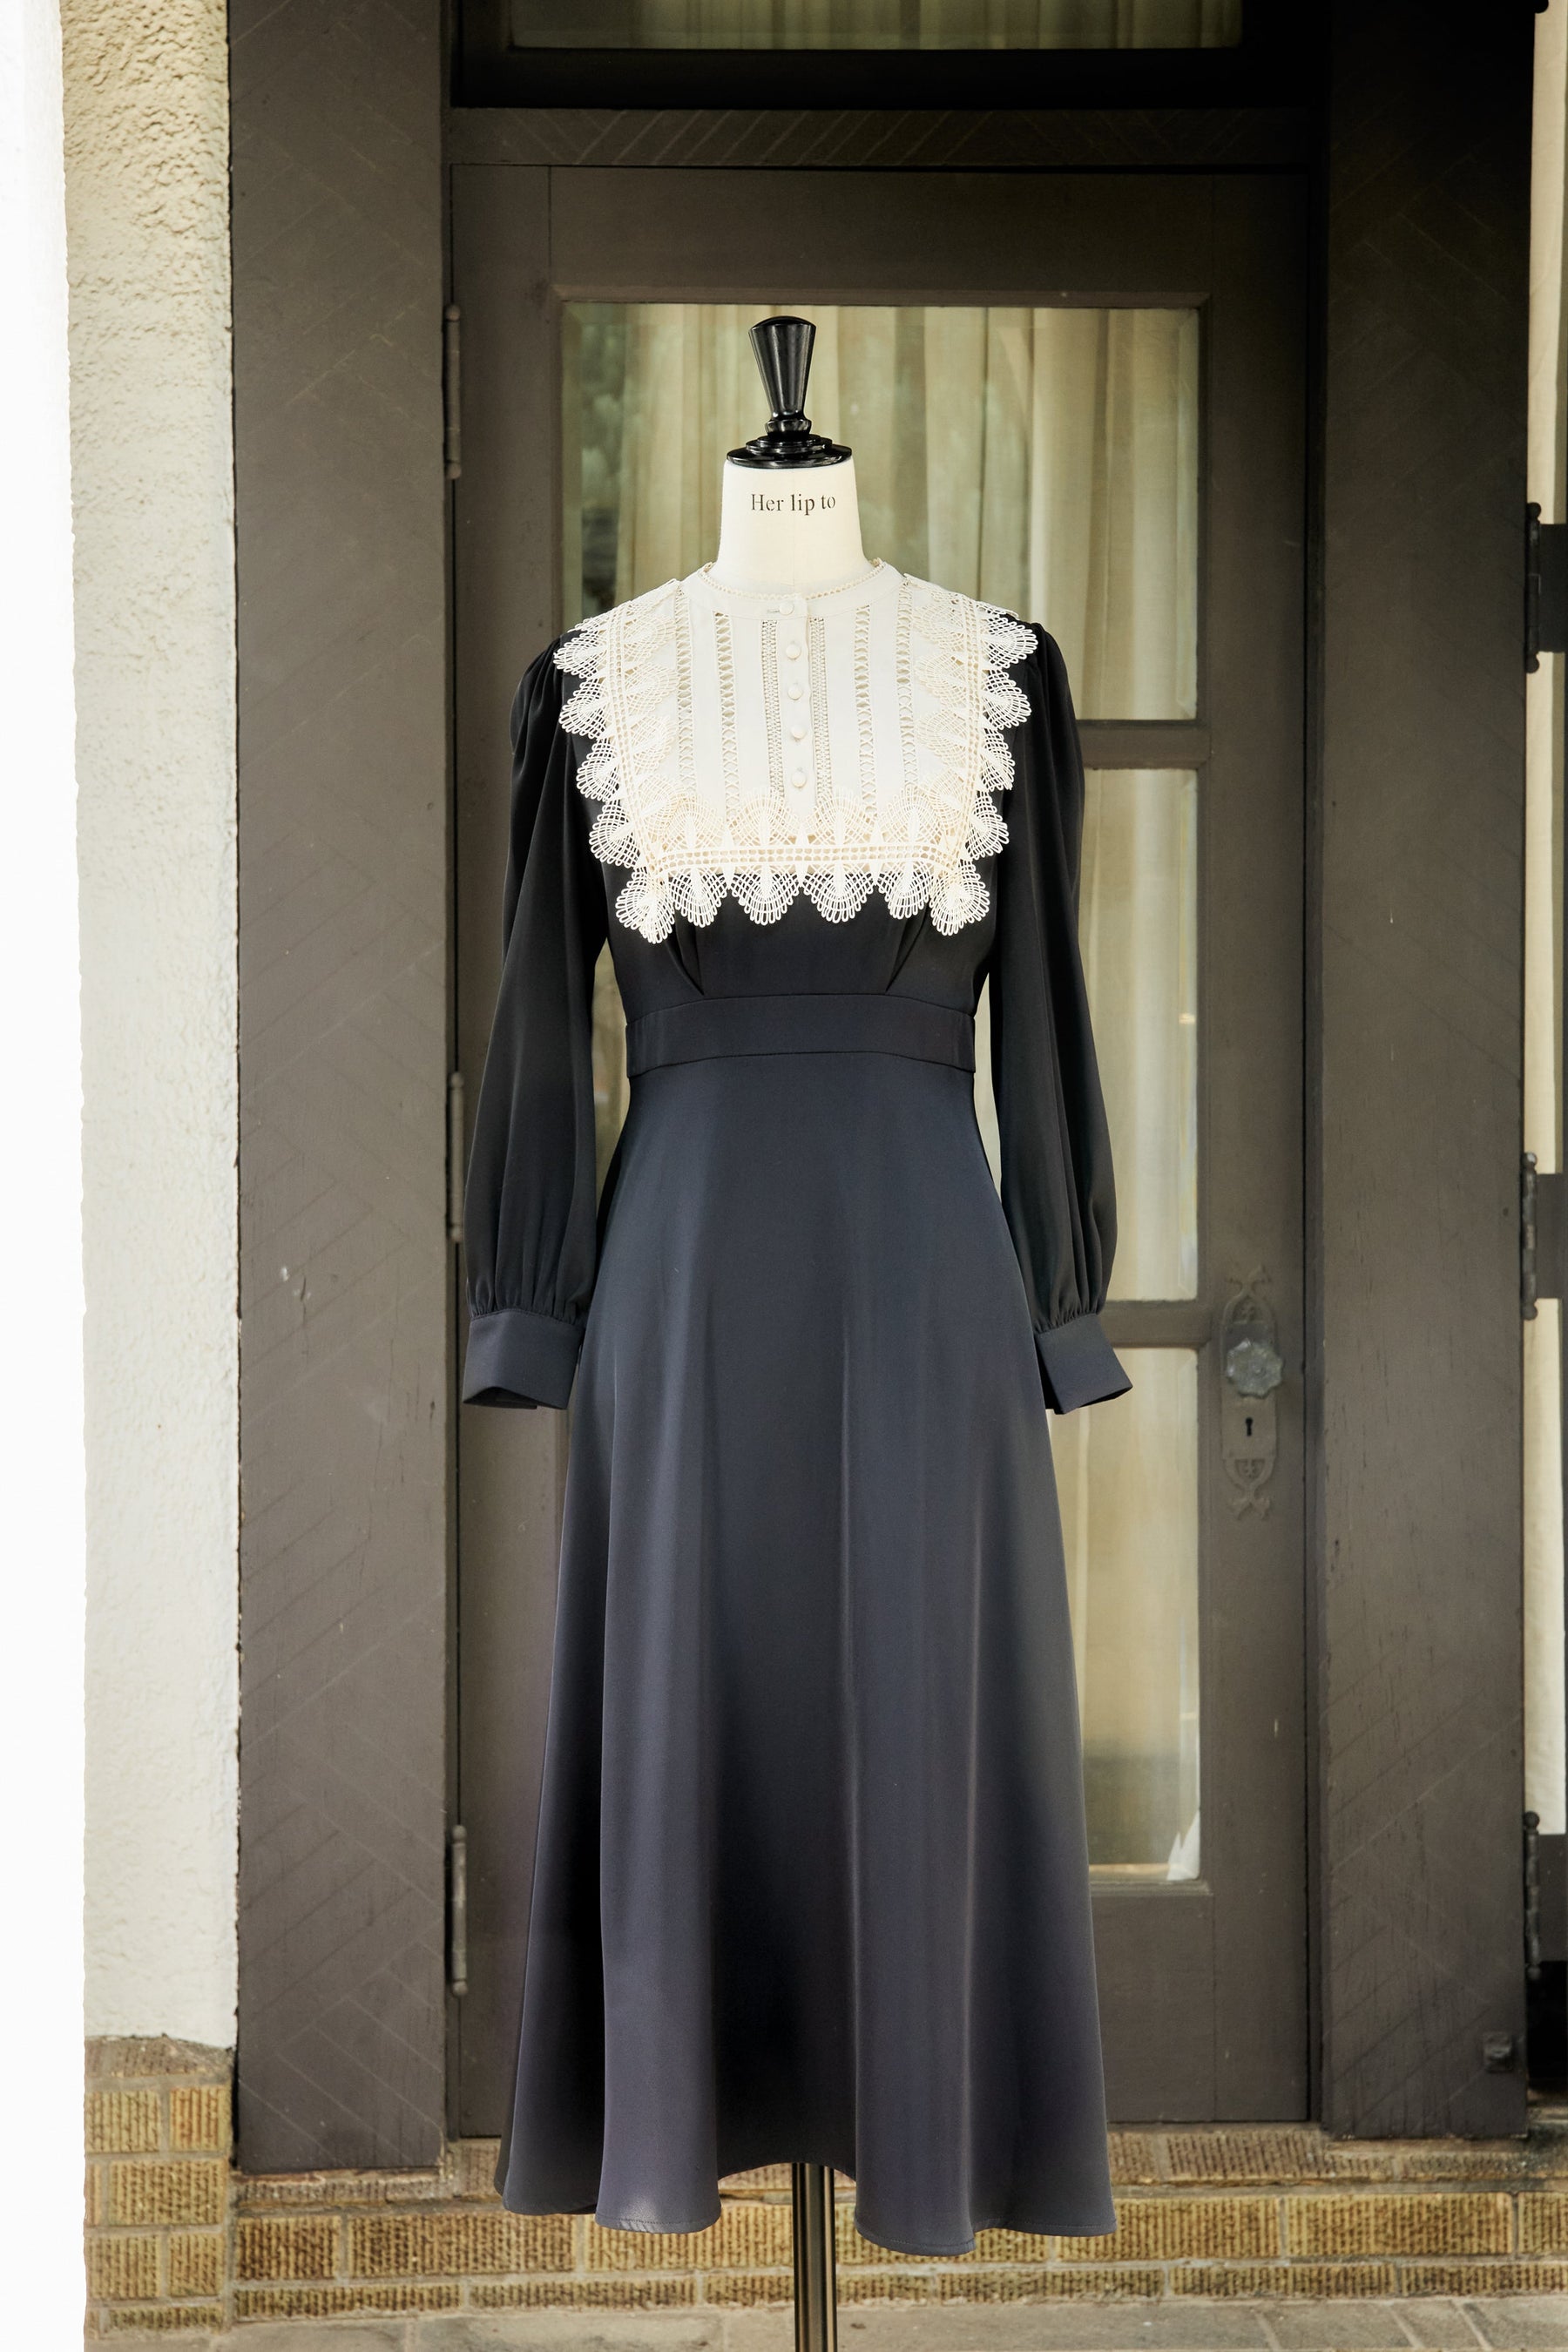 Herlipto ♡ Le Grand Midi Dress (Mサイズ)